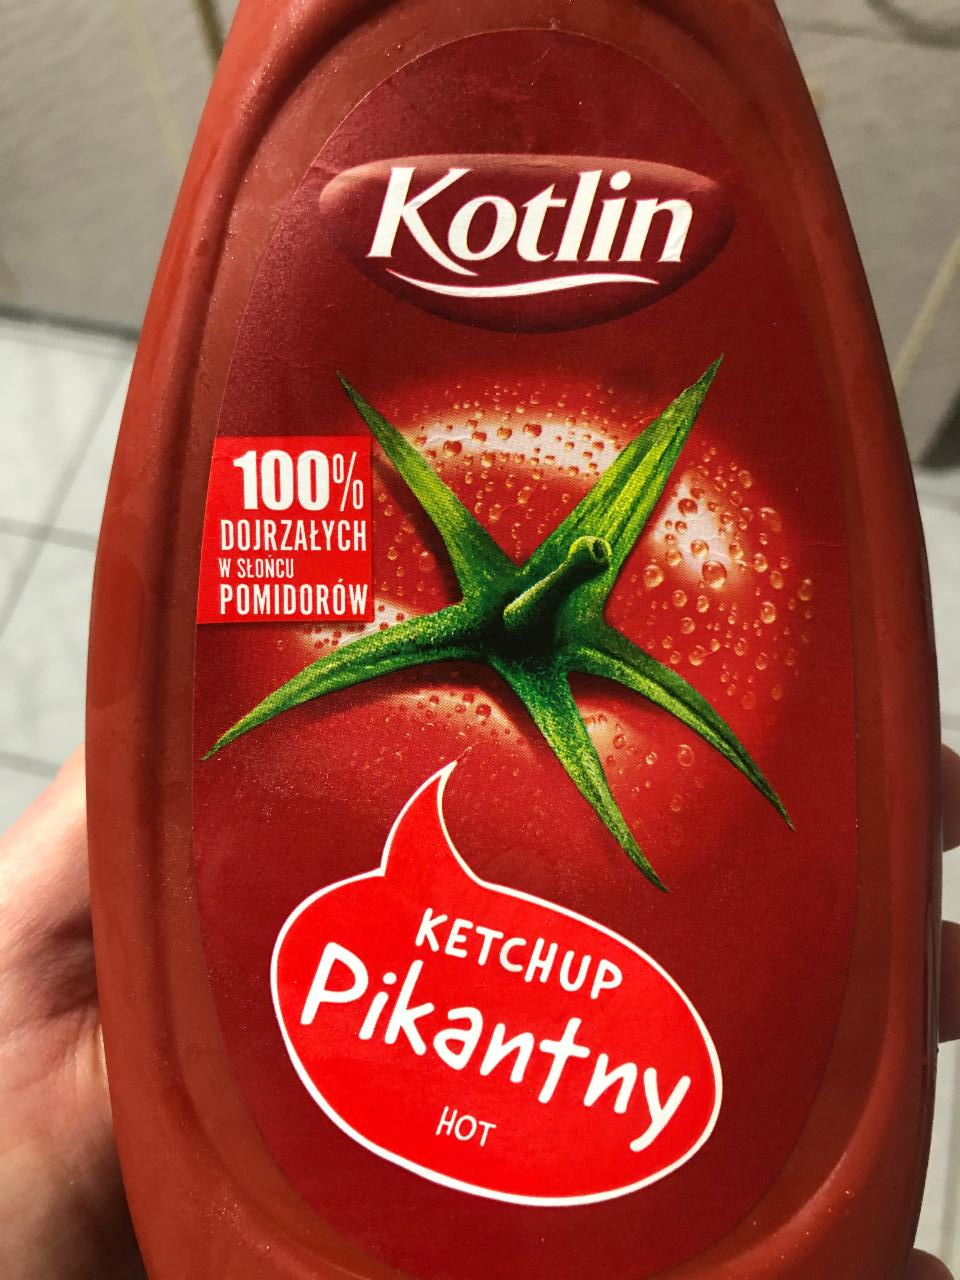 Fotografie - Kotlin ketchup pikantny 60% mniej kalorii